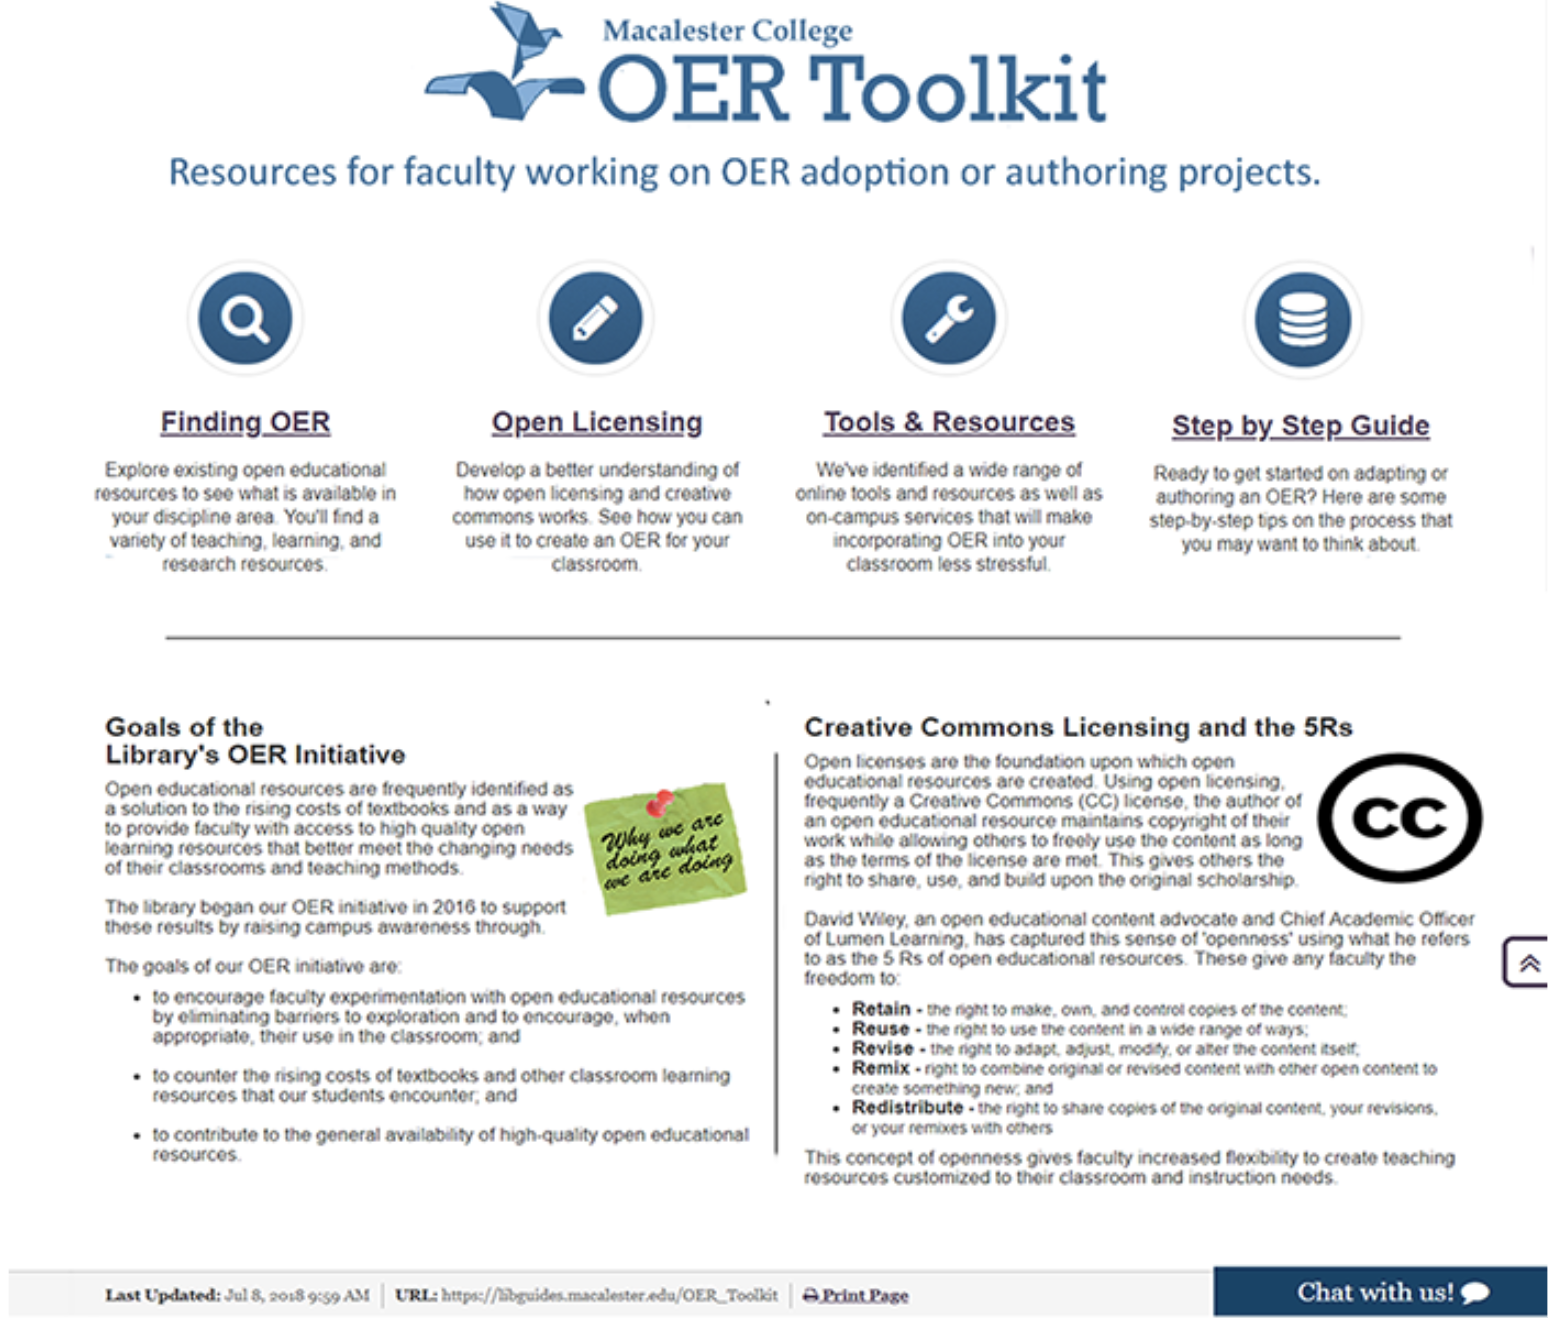 The OER Toolkit website